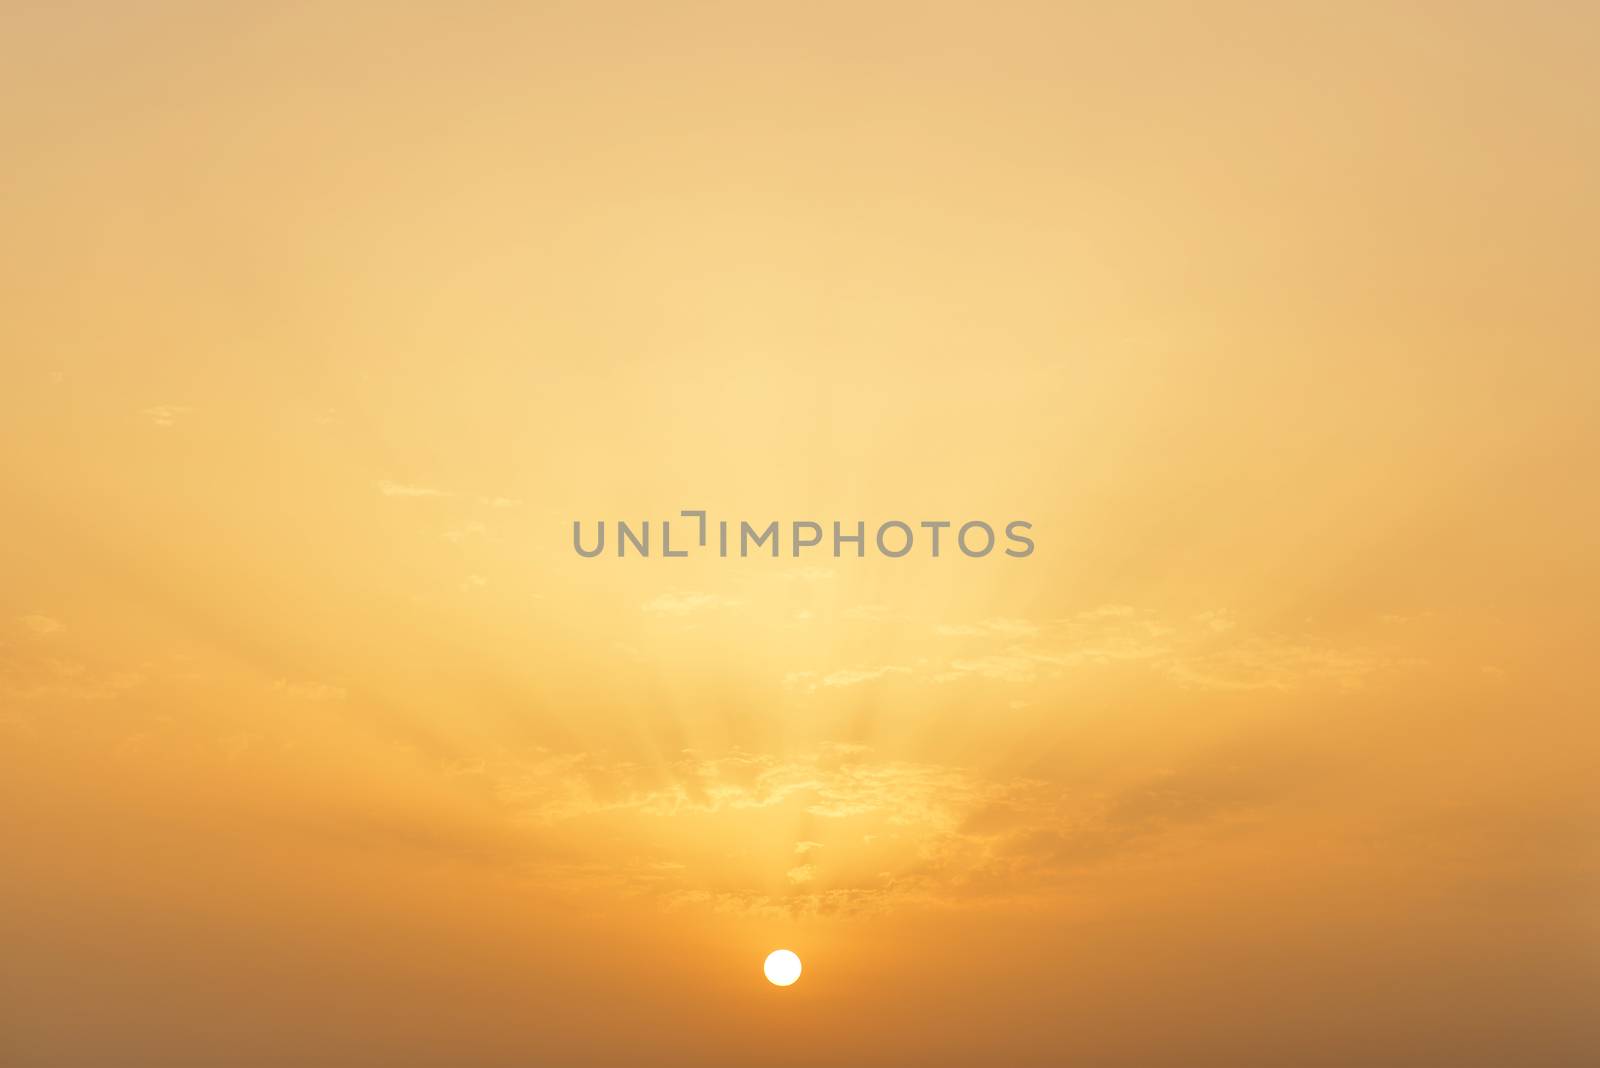 Sunset or sunrise by cherezoff